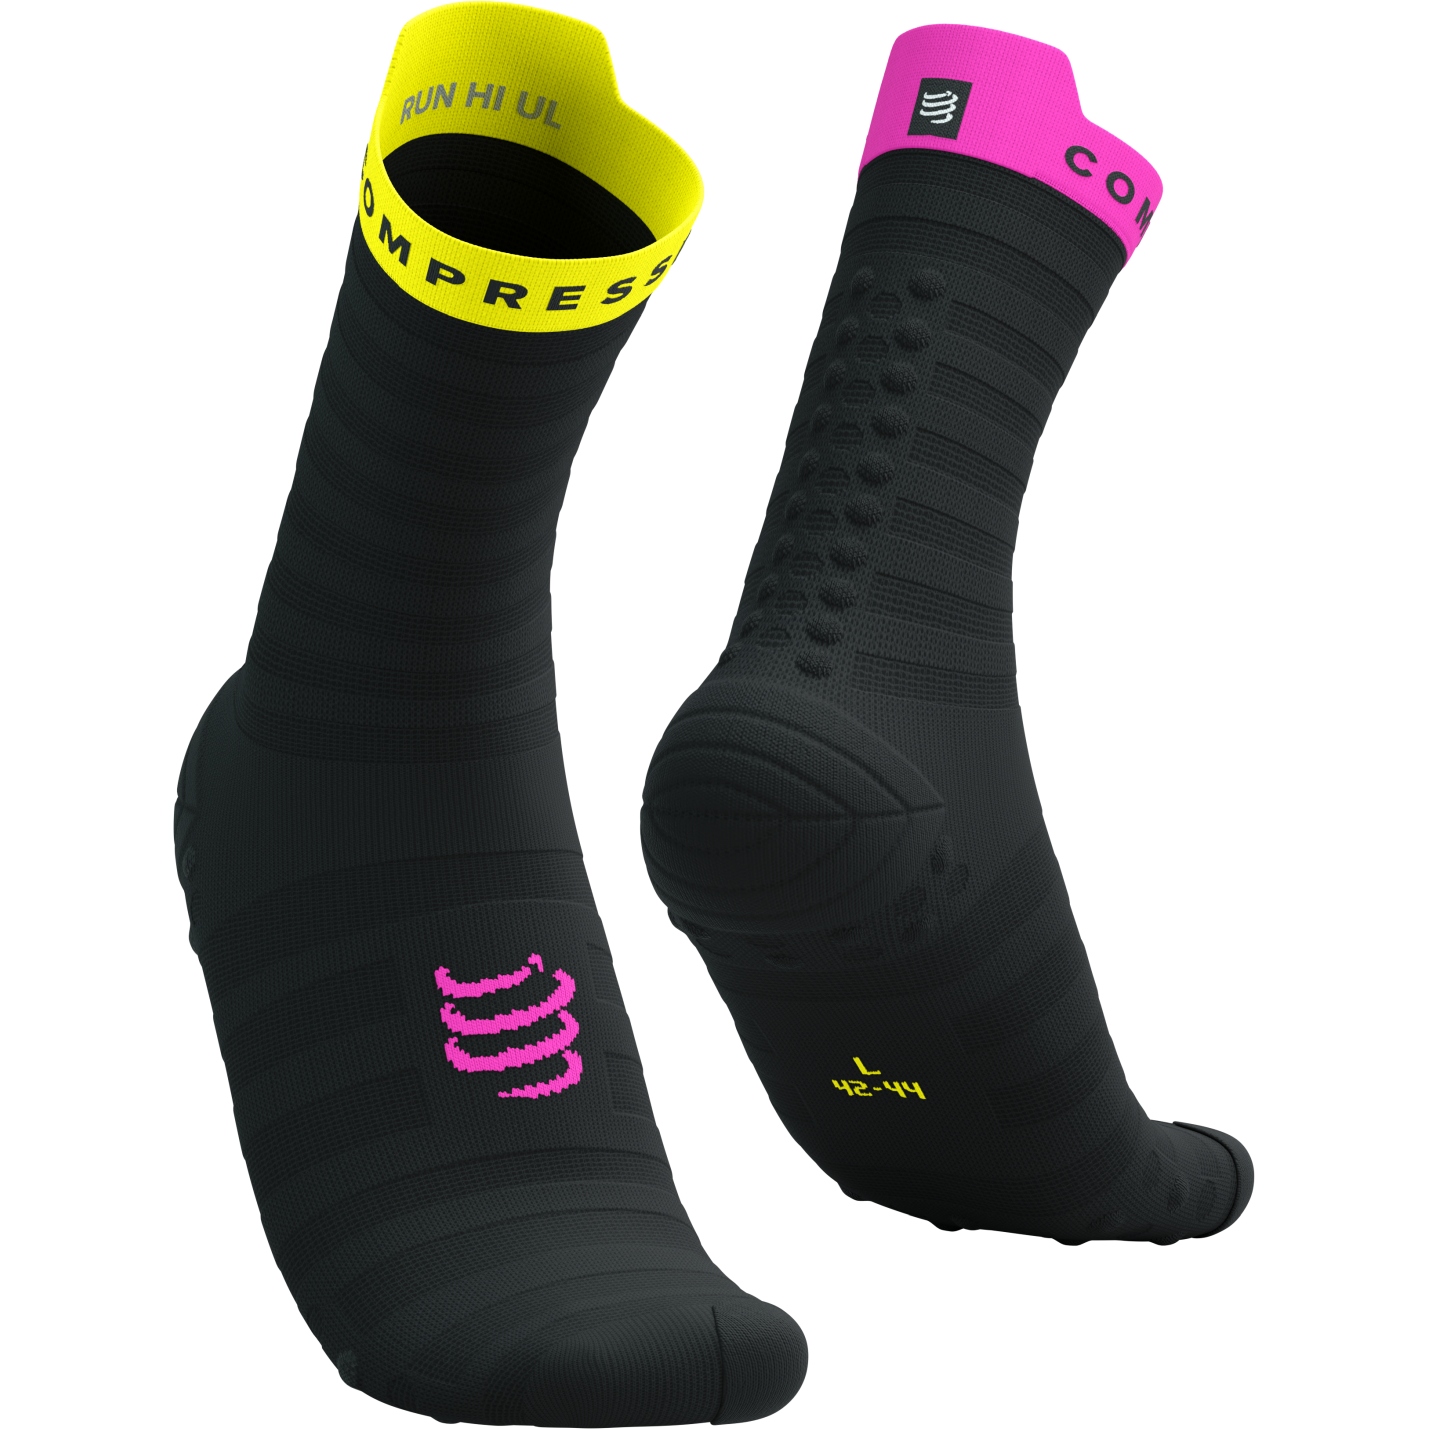 Productfoto van Compressport Pro Racing Compressiesokken v4.0 Ultralight Run High - black/safety yellow/neon pink